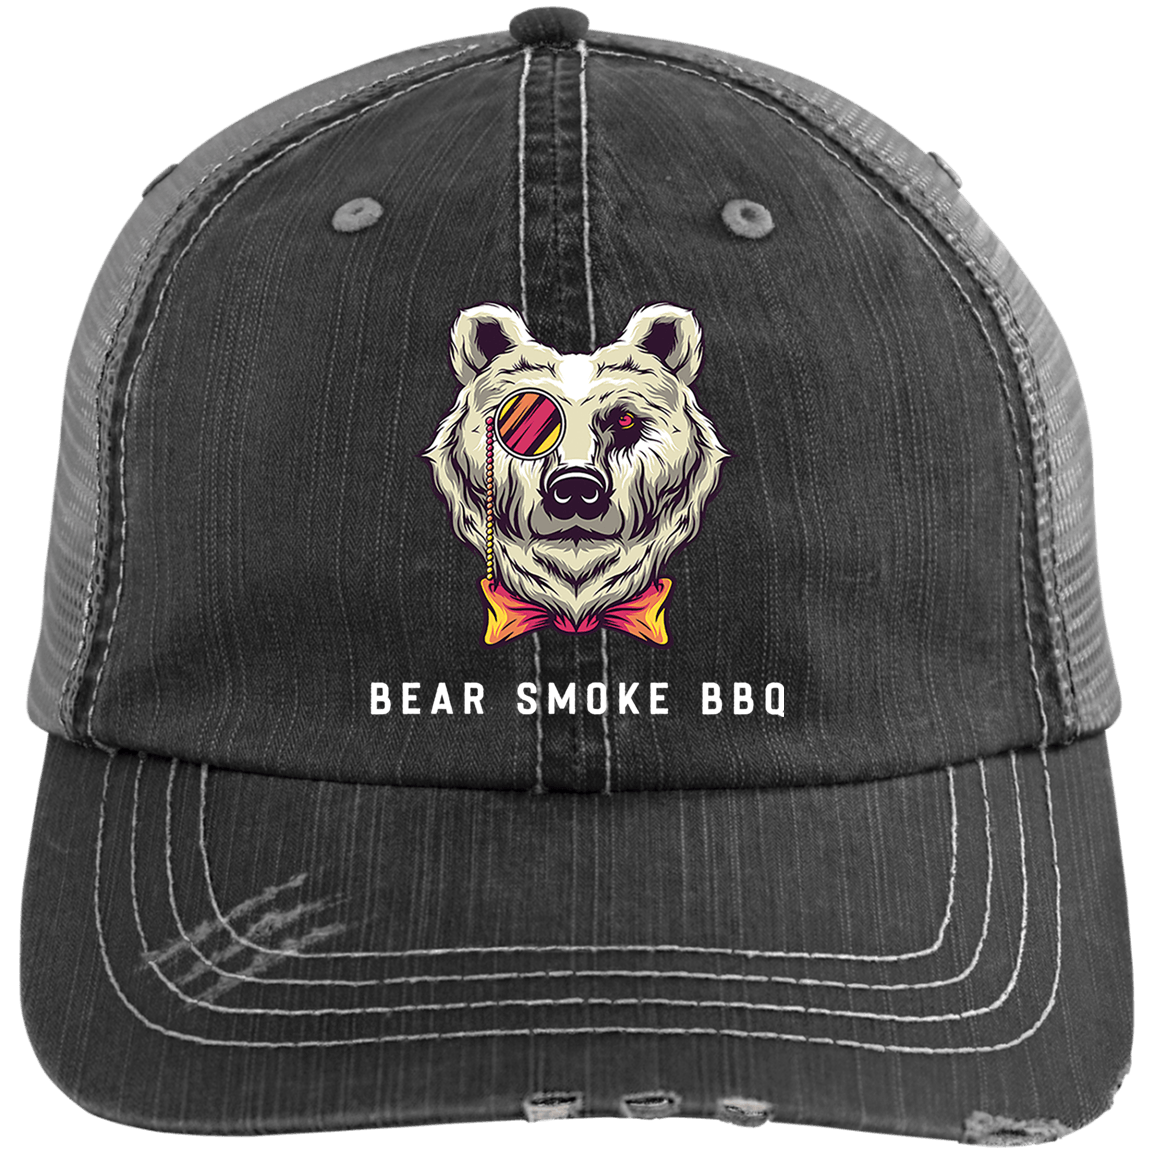 Bear Smoke Distressed Unstructured Trucker Cap - Bear Smoke BBQ